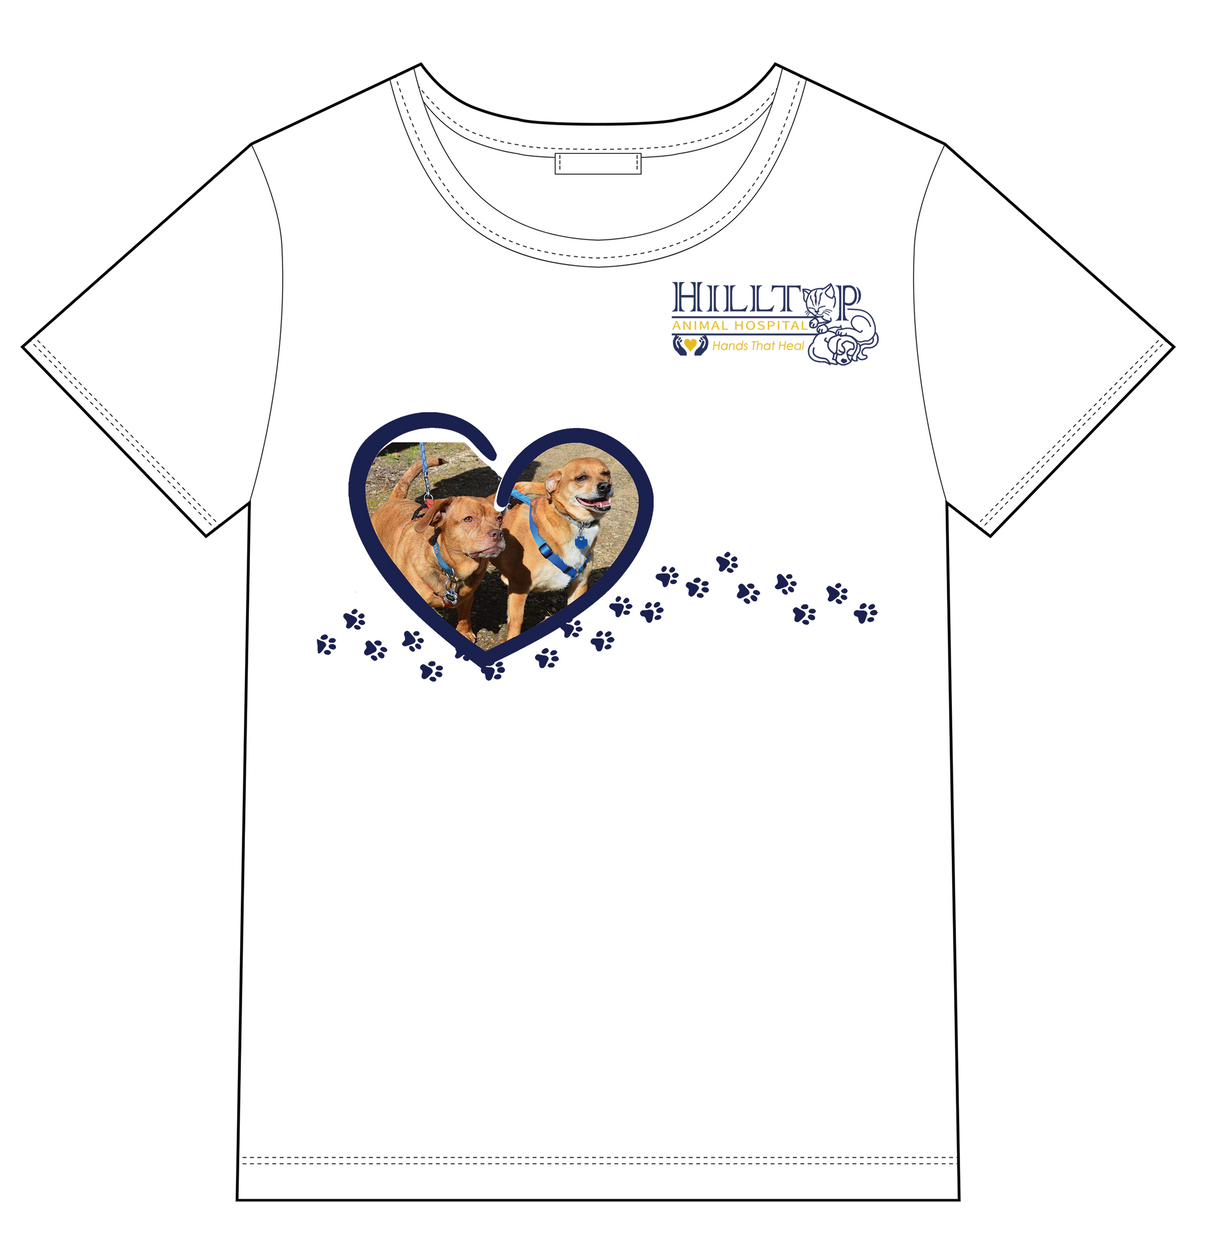 Hilltop Animal Hospital Event Shirt